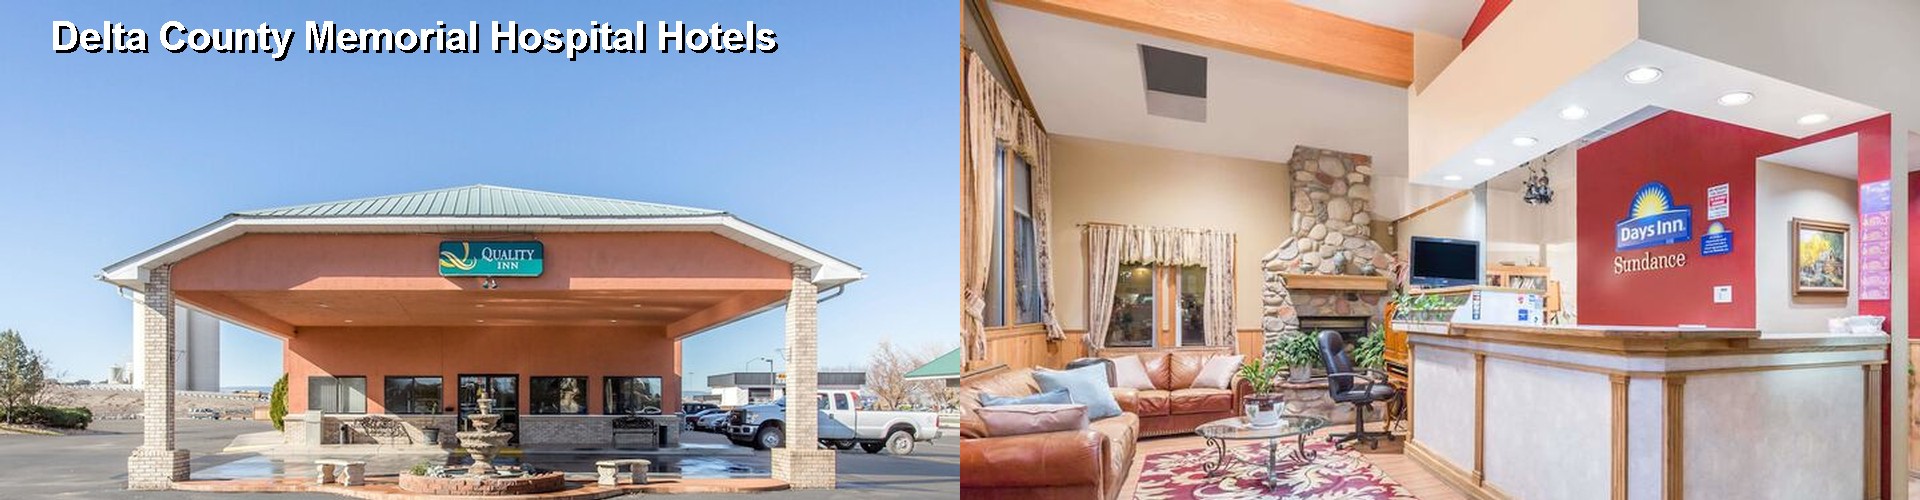 5 Best Hotels near Delta County Memorial Hospital